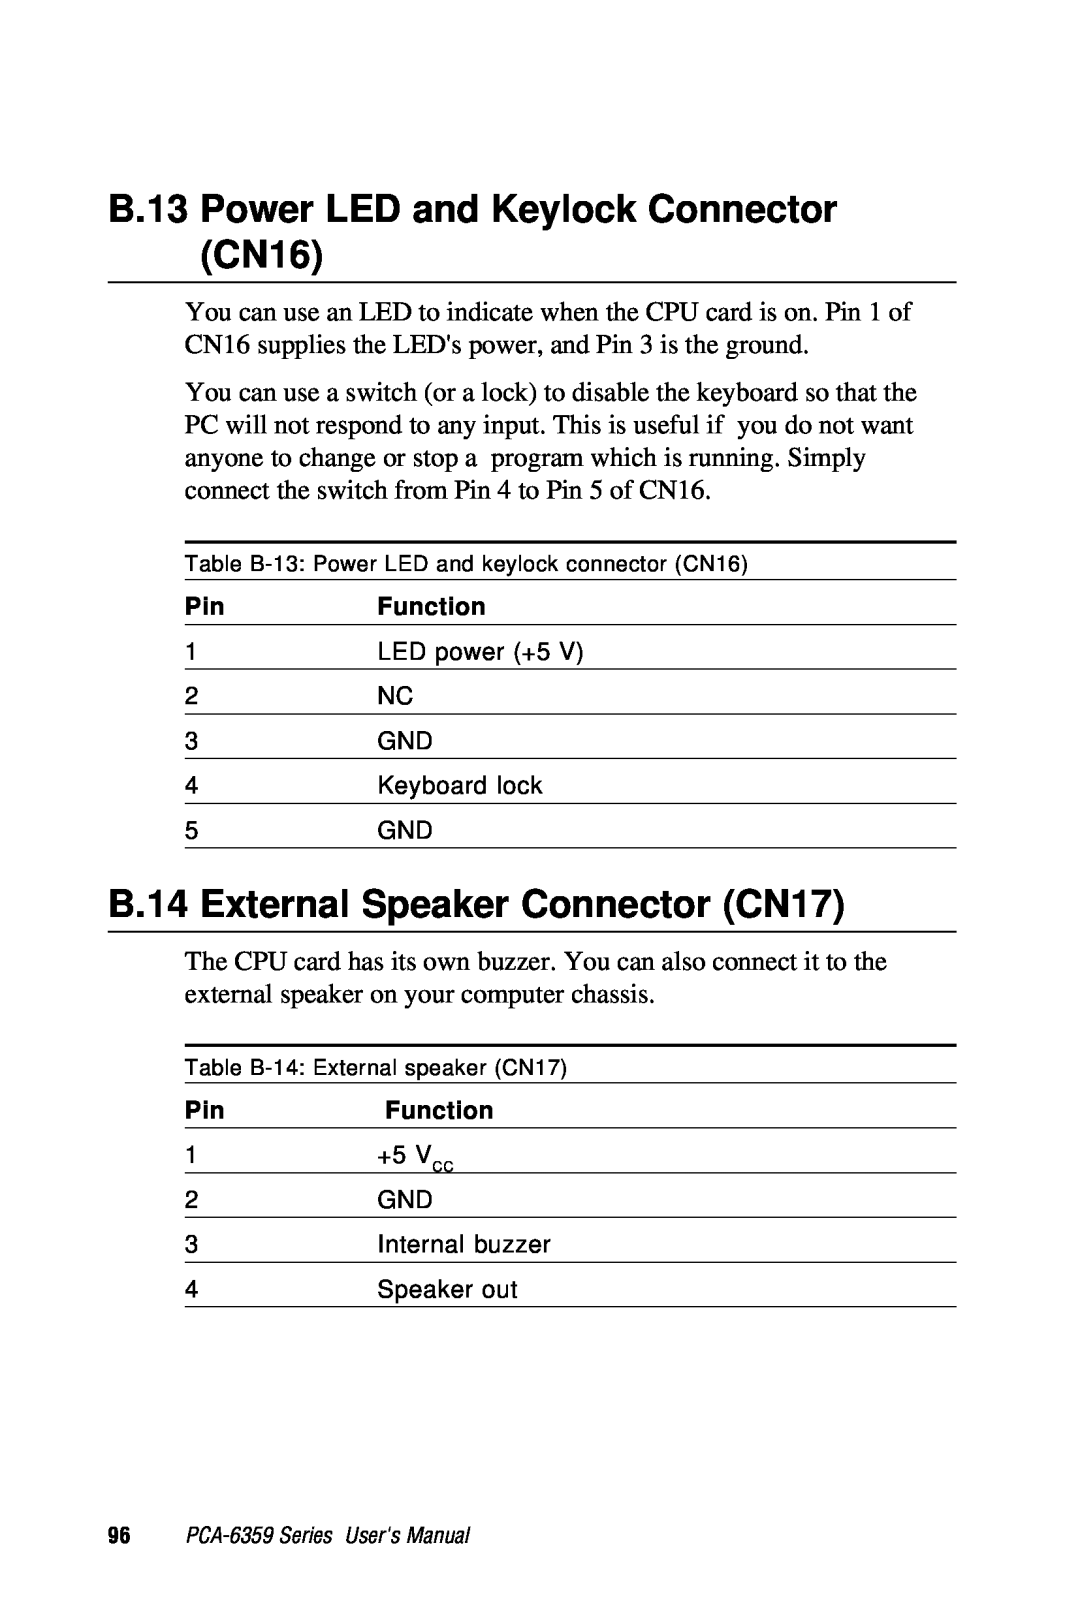 Advantech PCA-6359 user manual B.13 Power LED and Keylock Connector CN16, B.14 External Speaker Connector CN17 